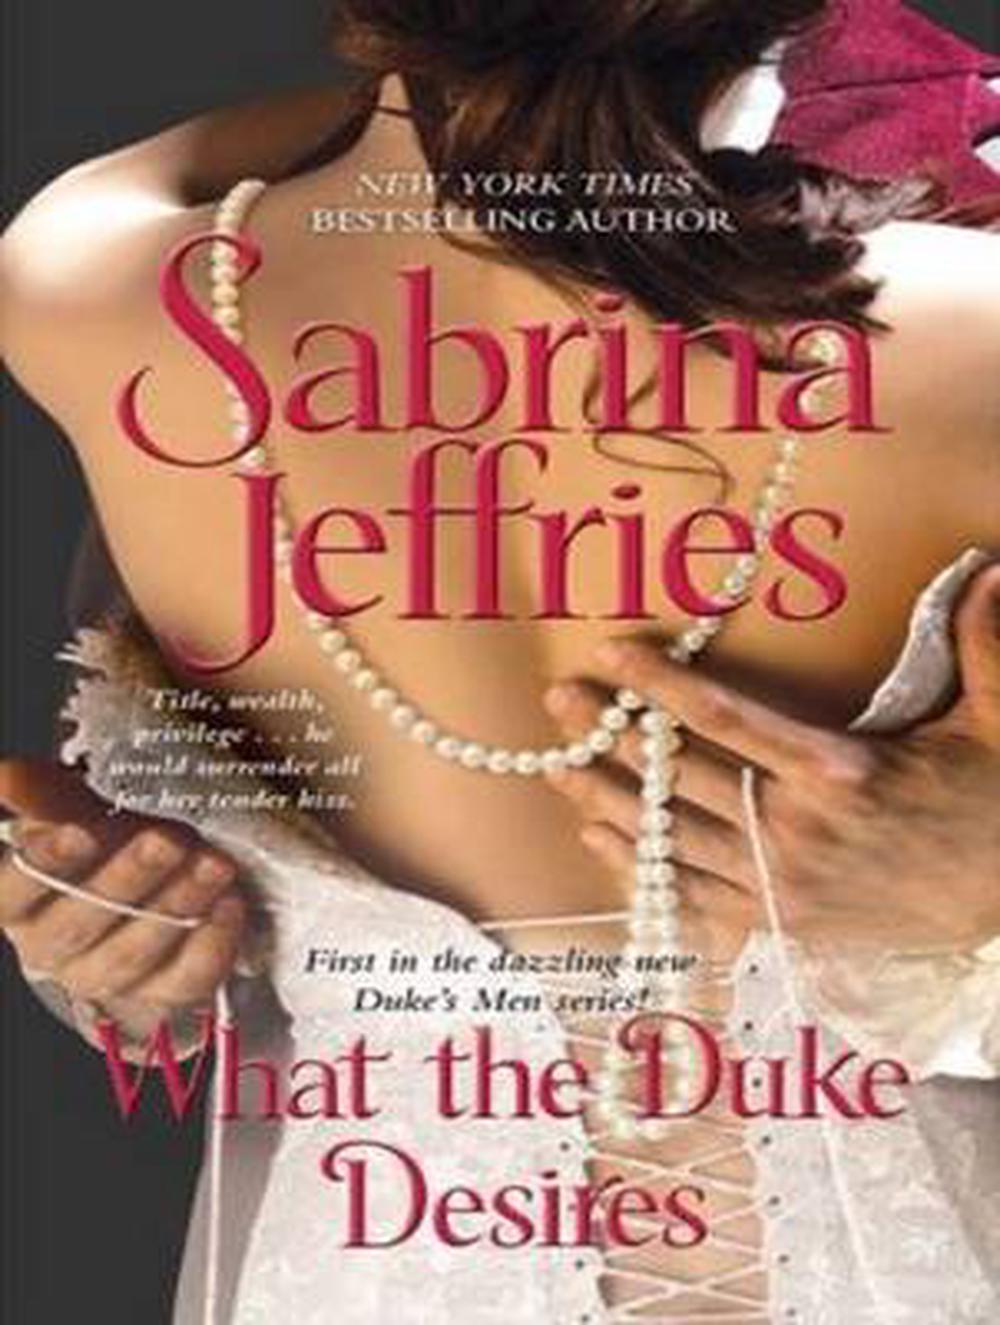 Undercover Duke by Sabrina Jeffries